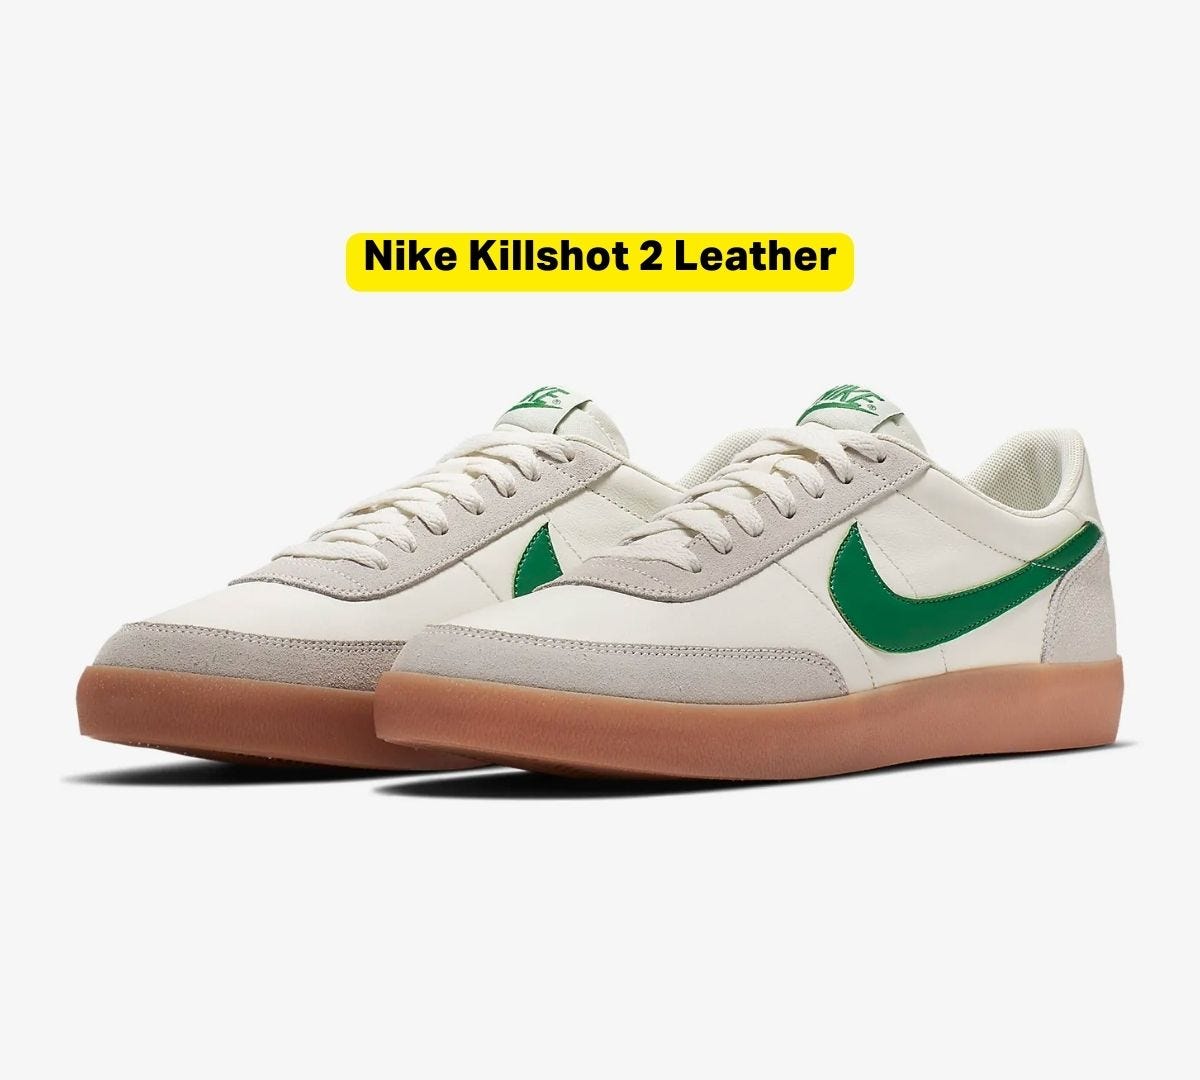 nike killshot 2 leather sneaker in green